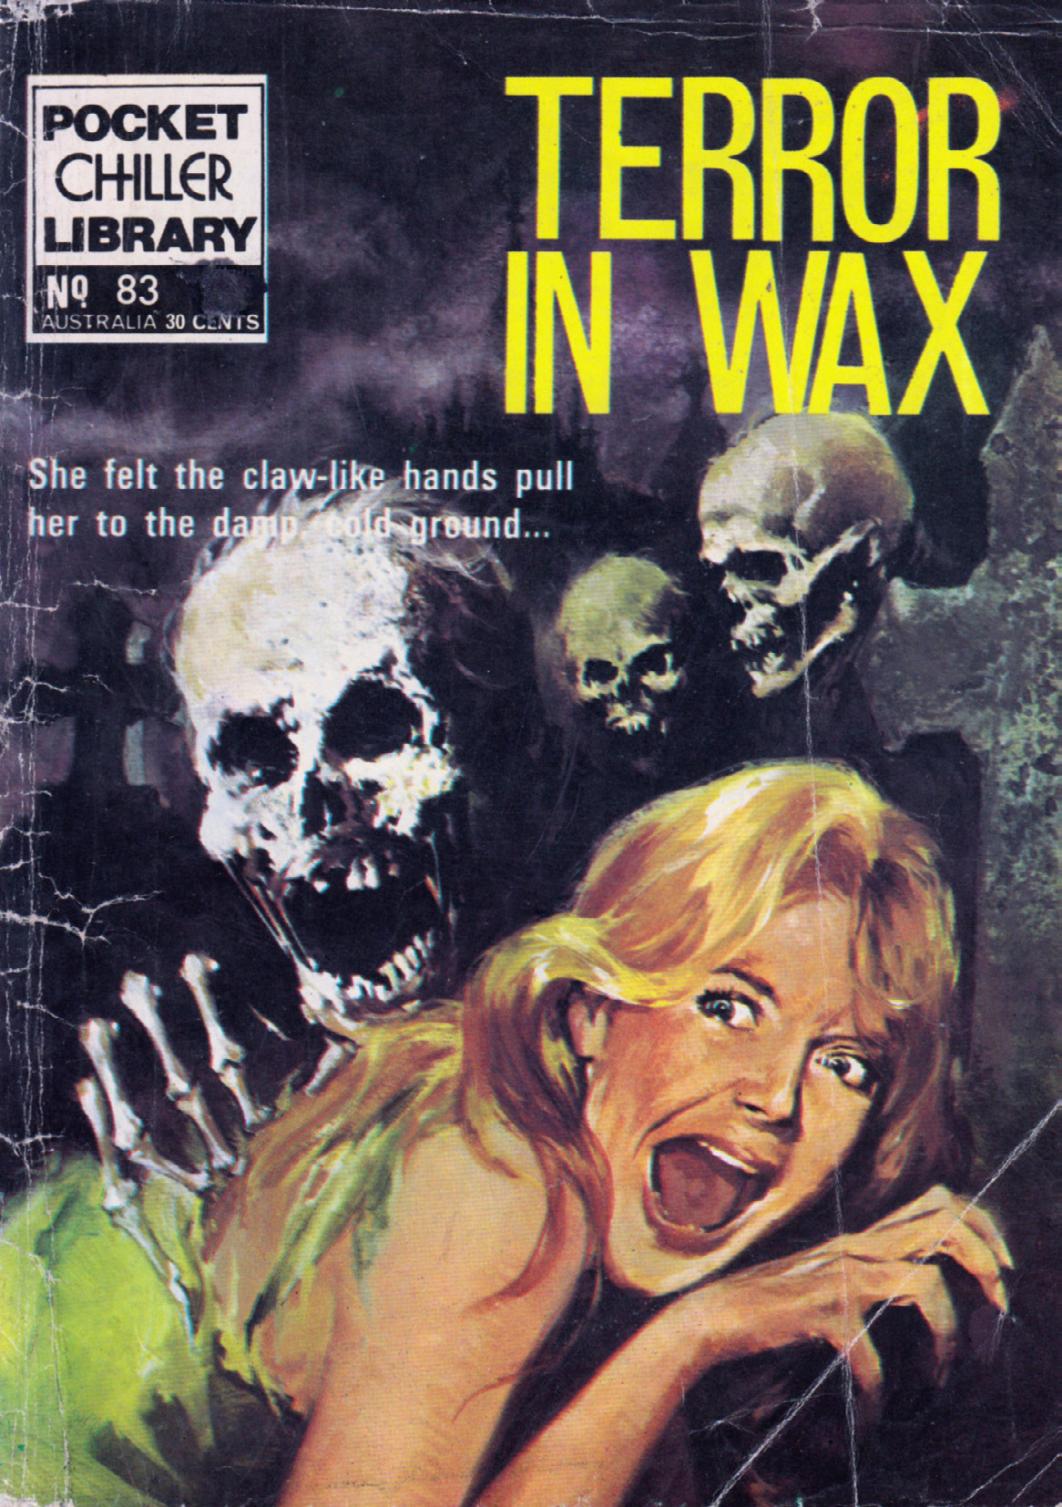 Pocket Chiller Library 83 - Terror in Wax